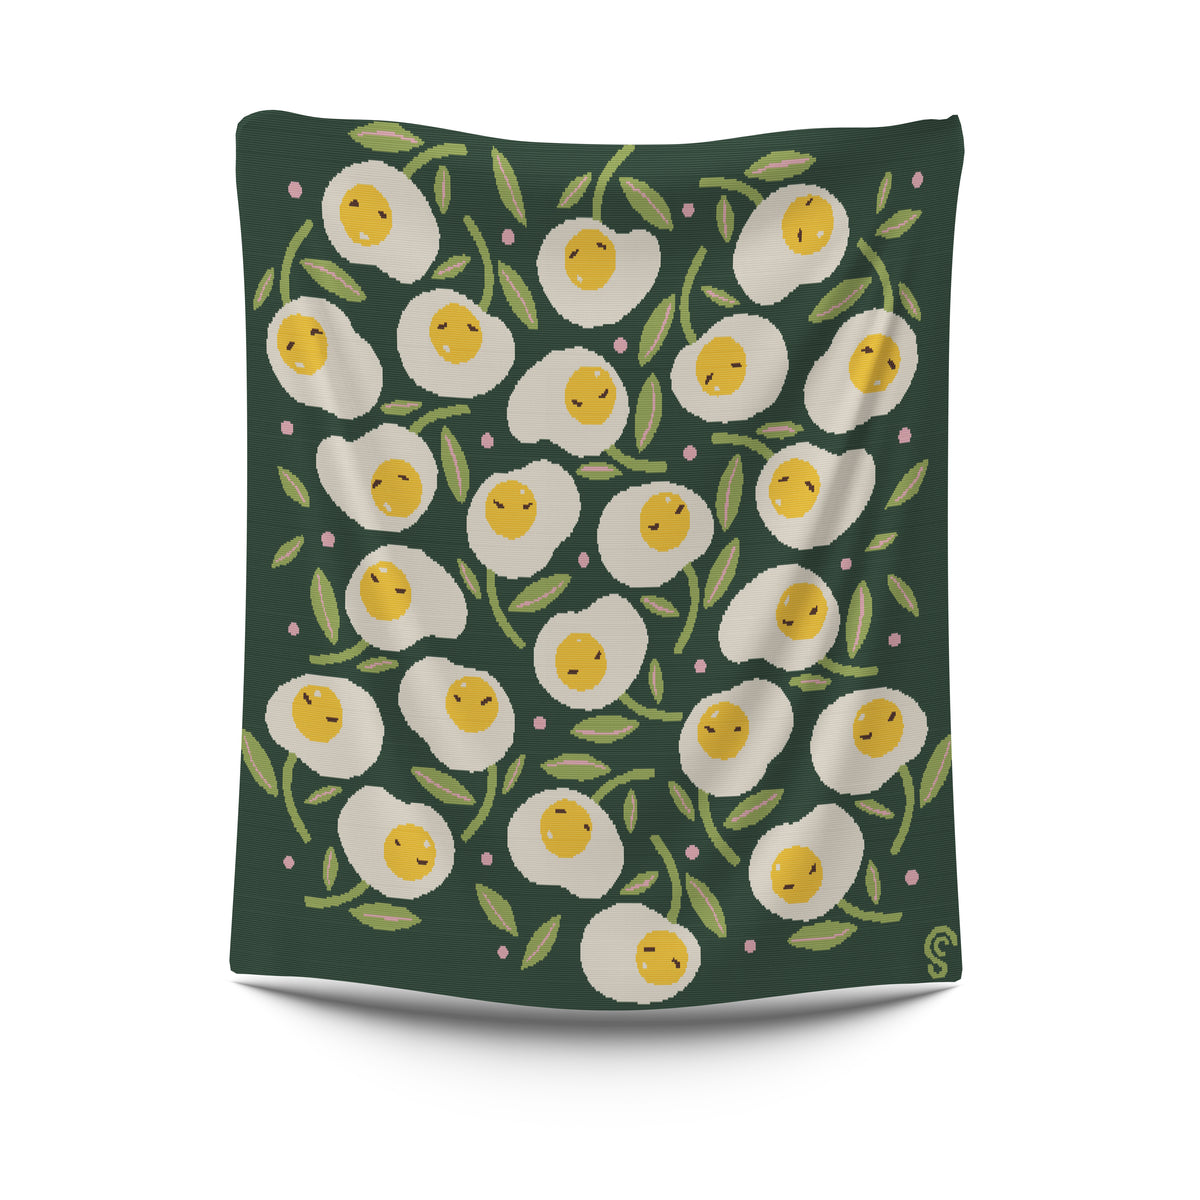 Sunnyside Grass Cotton Knit Blanket